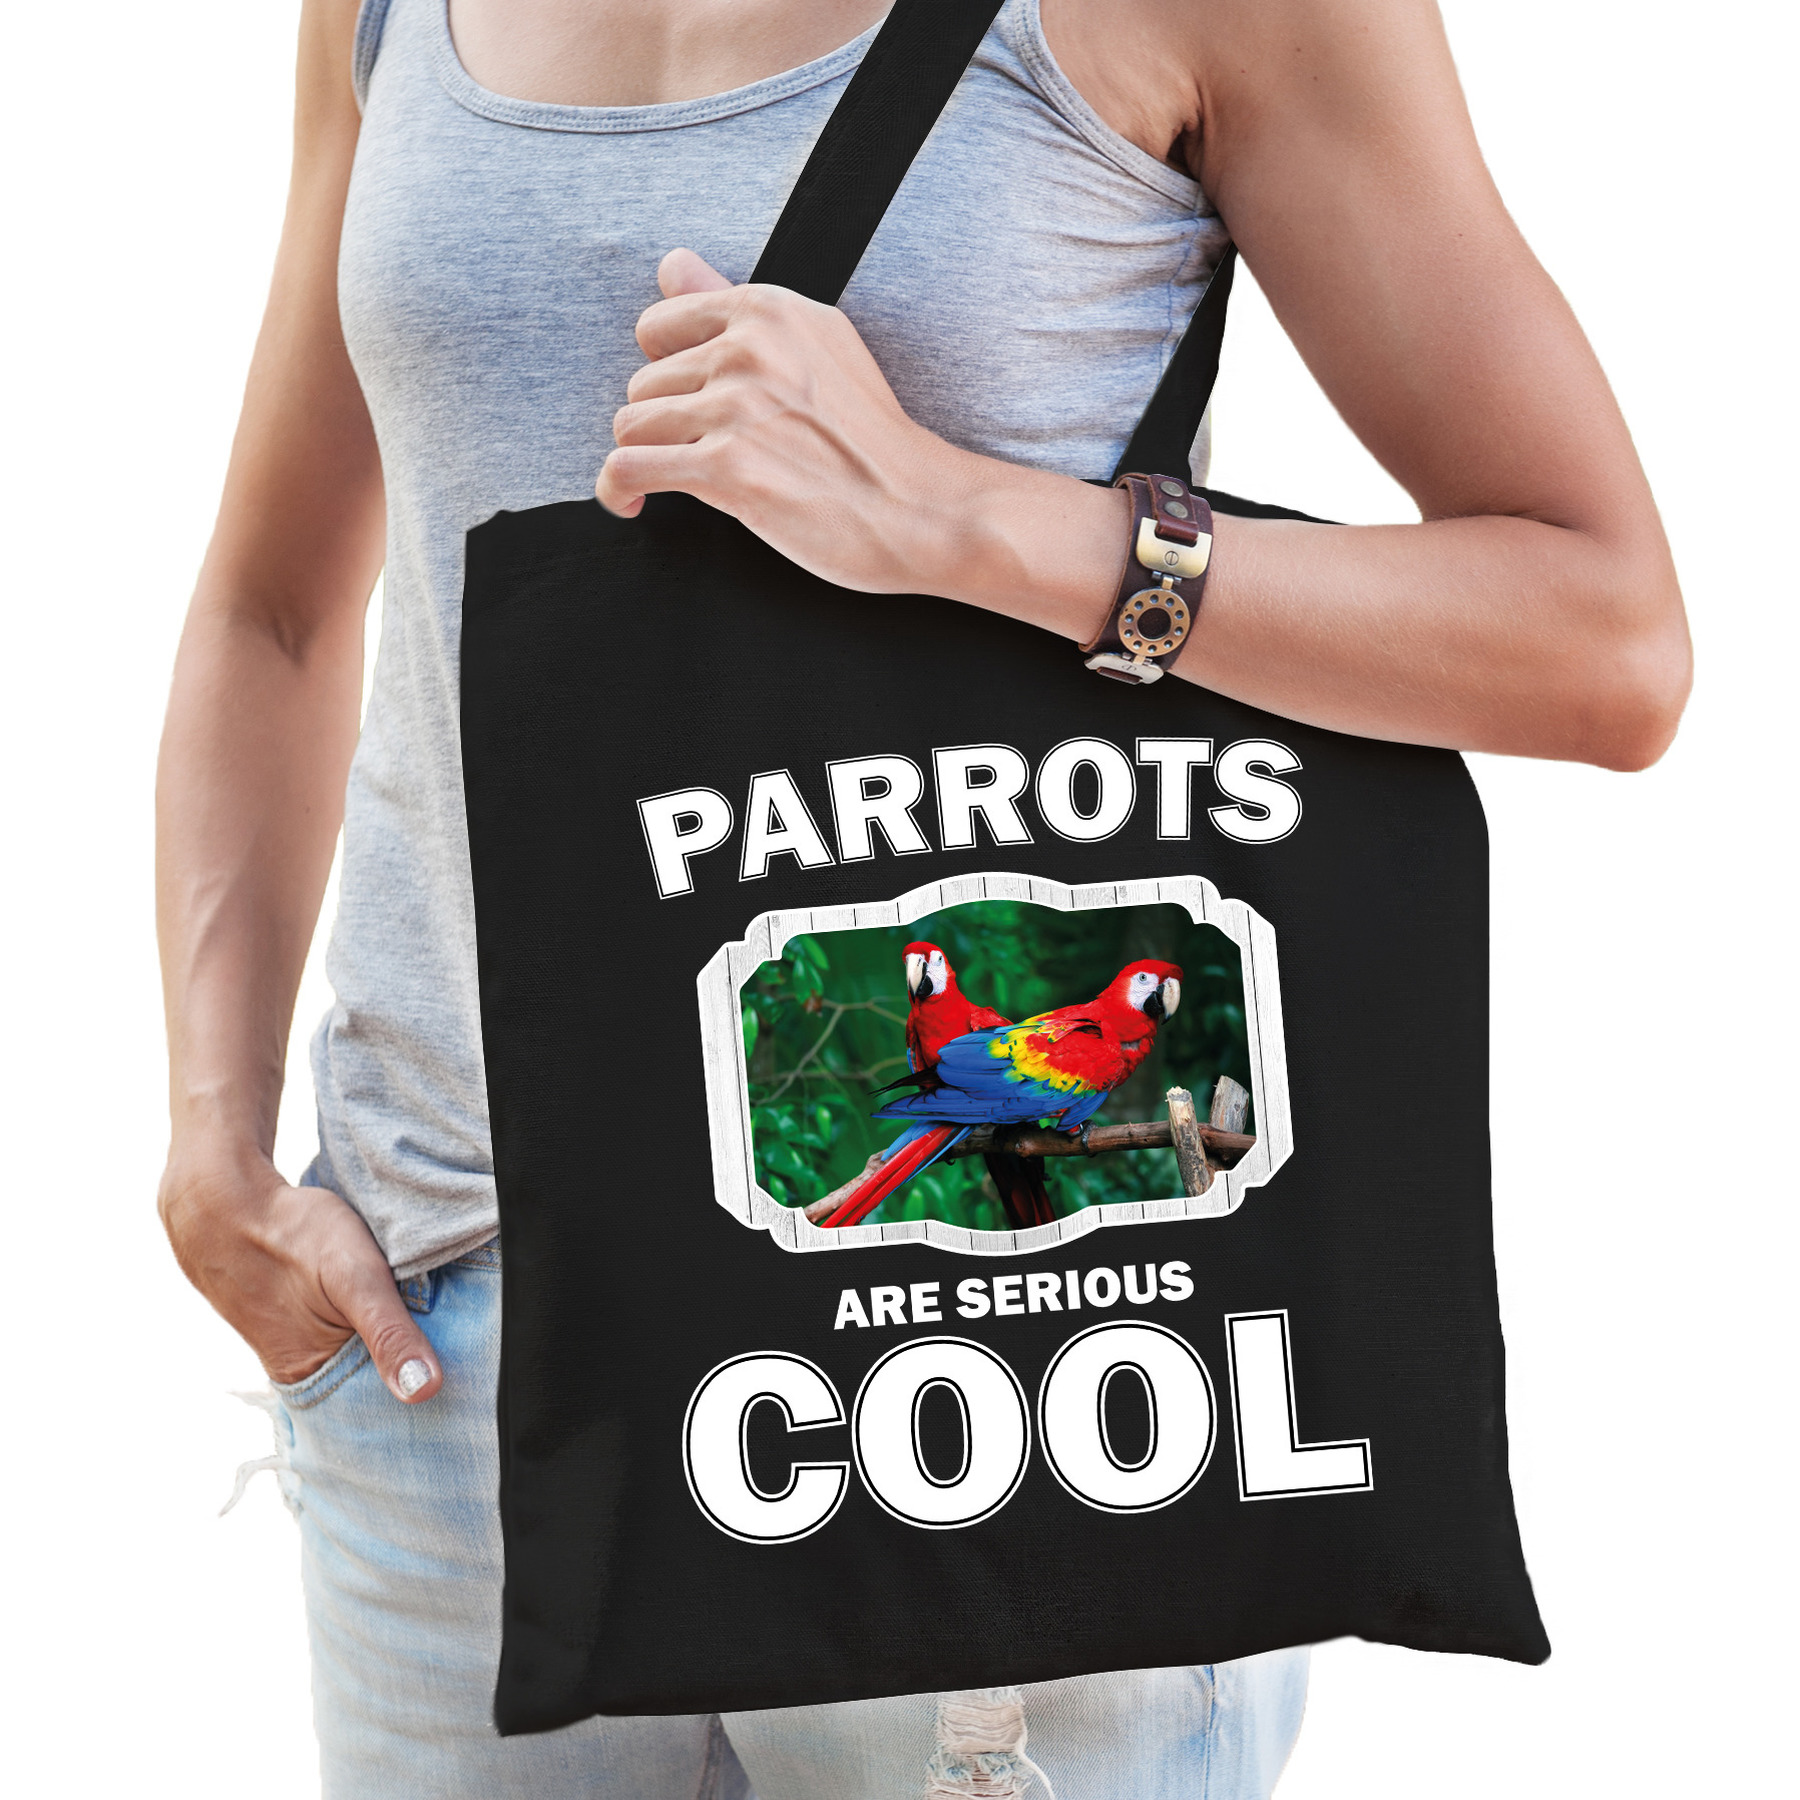 Katoenen tasje parrots are serious cool zwart - papegaaien/ papegaai cadeau tas